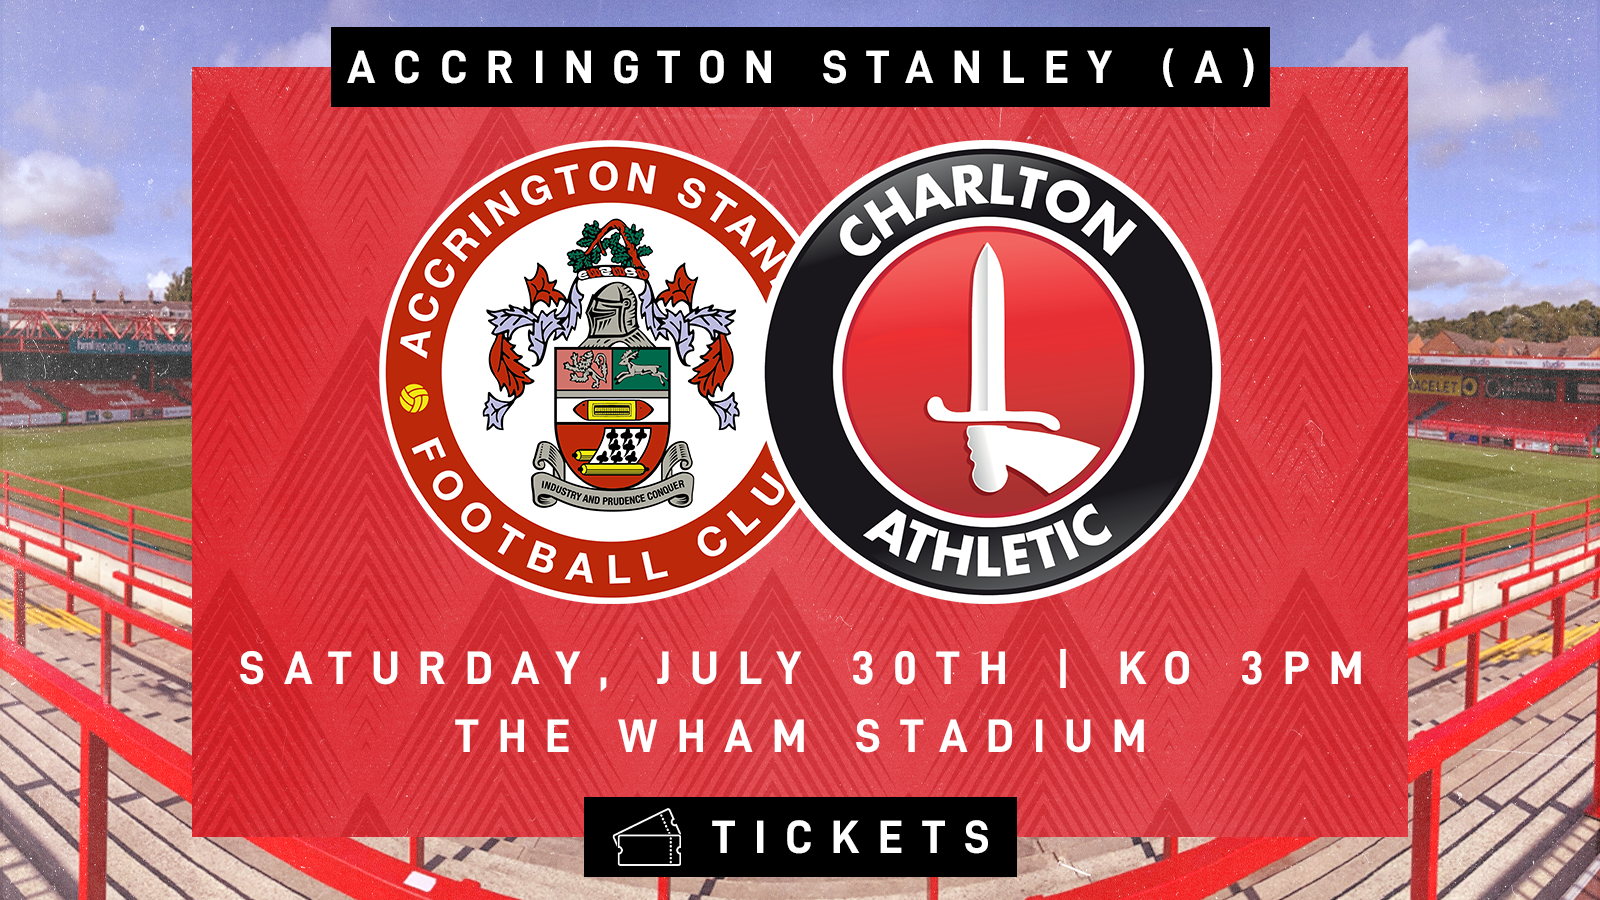 Accrington Stanley tickets graphic